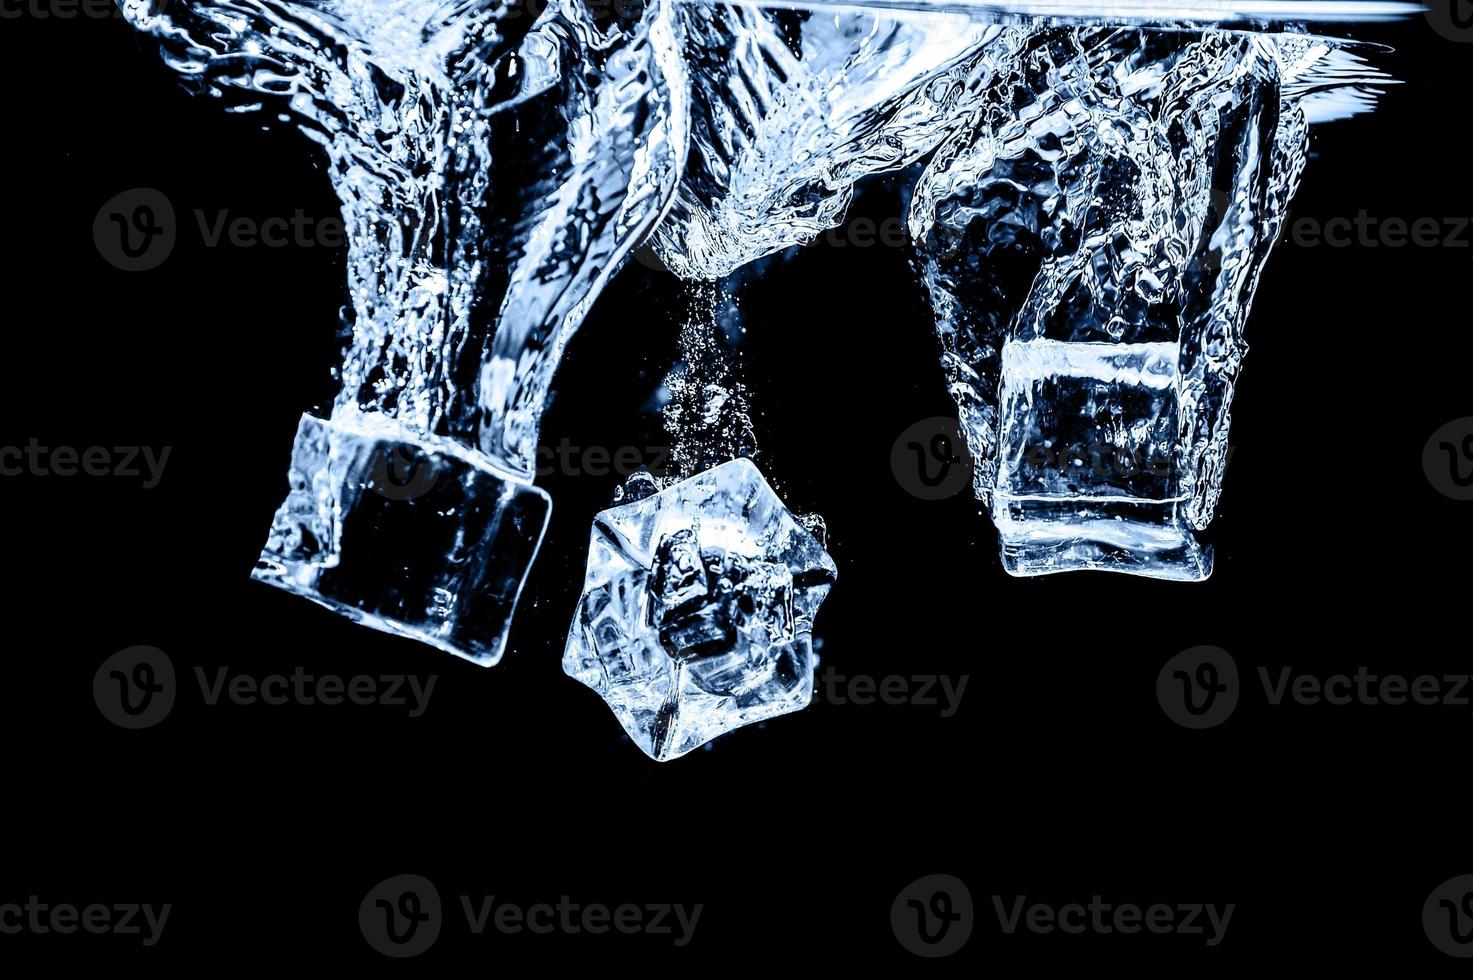 cubos de gelo na água no fundo escuro do estúdio. o conceito de frescura com frieza de cubos de gelo. foto